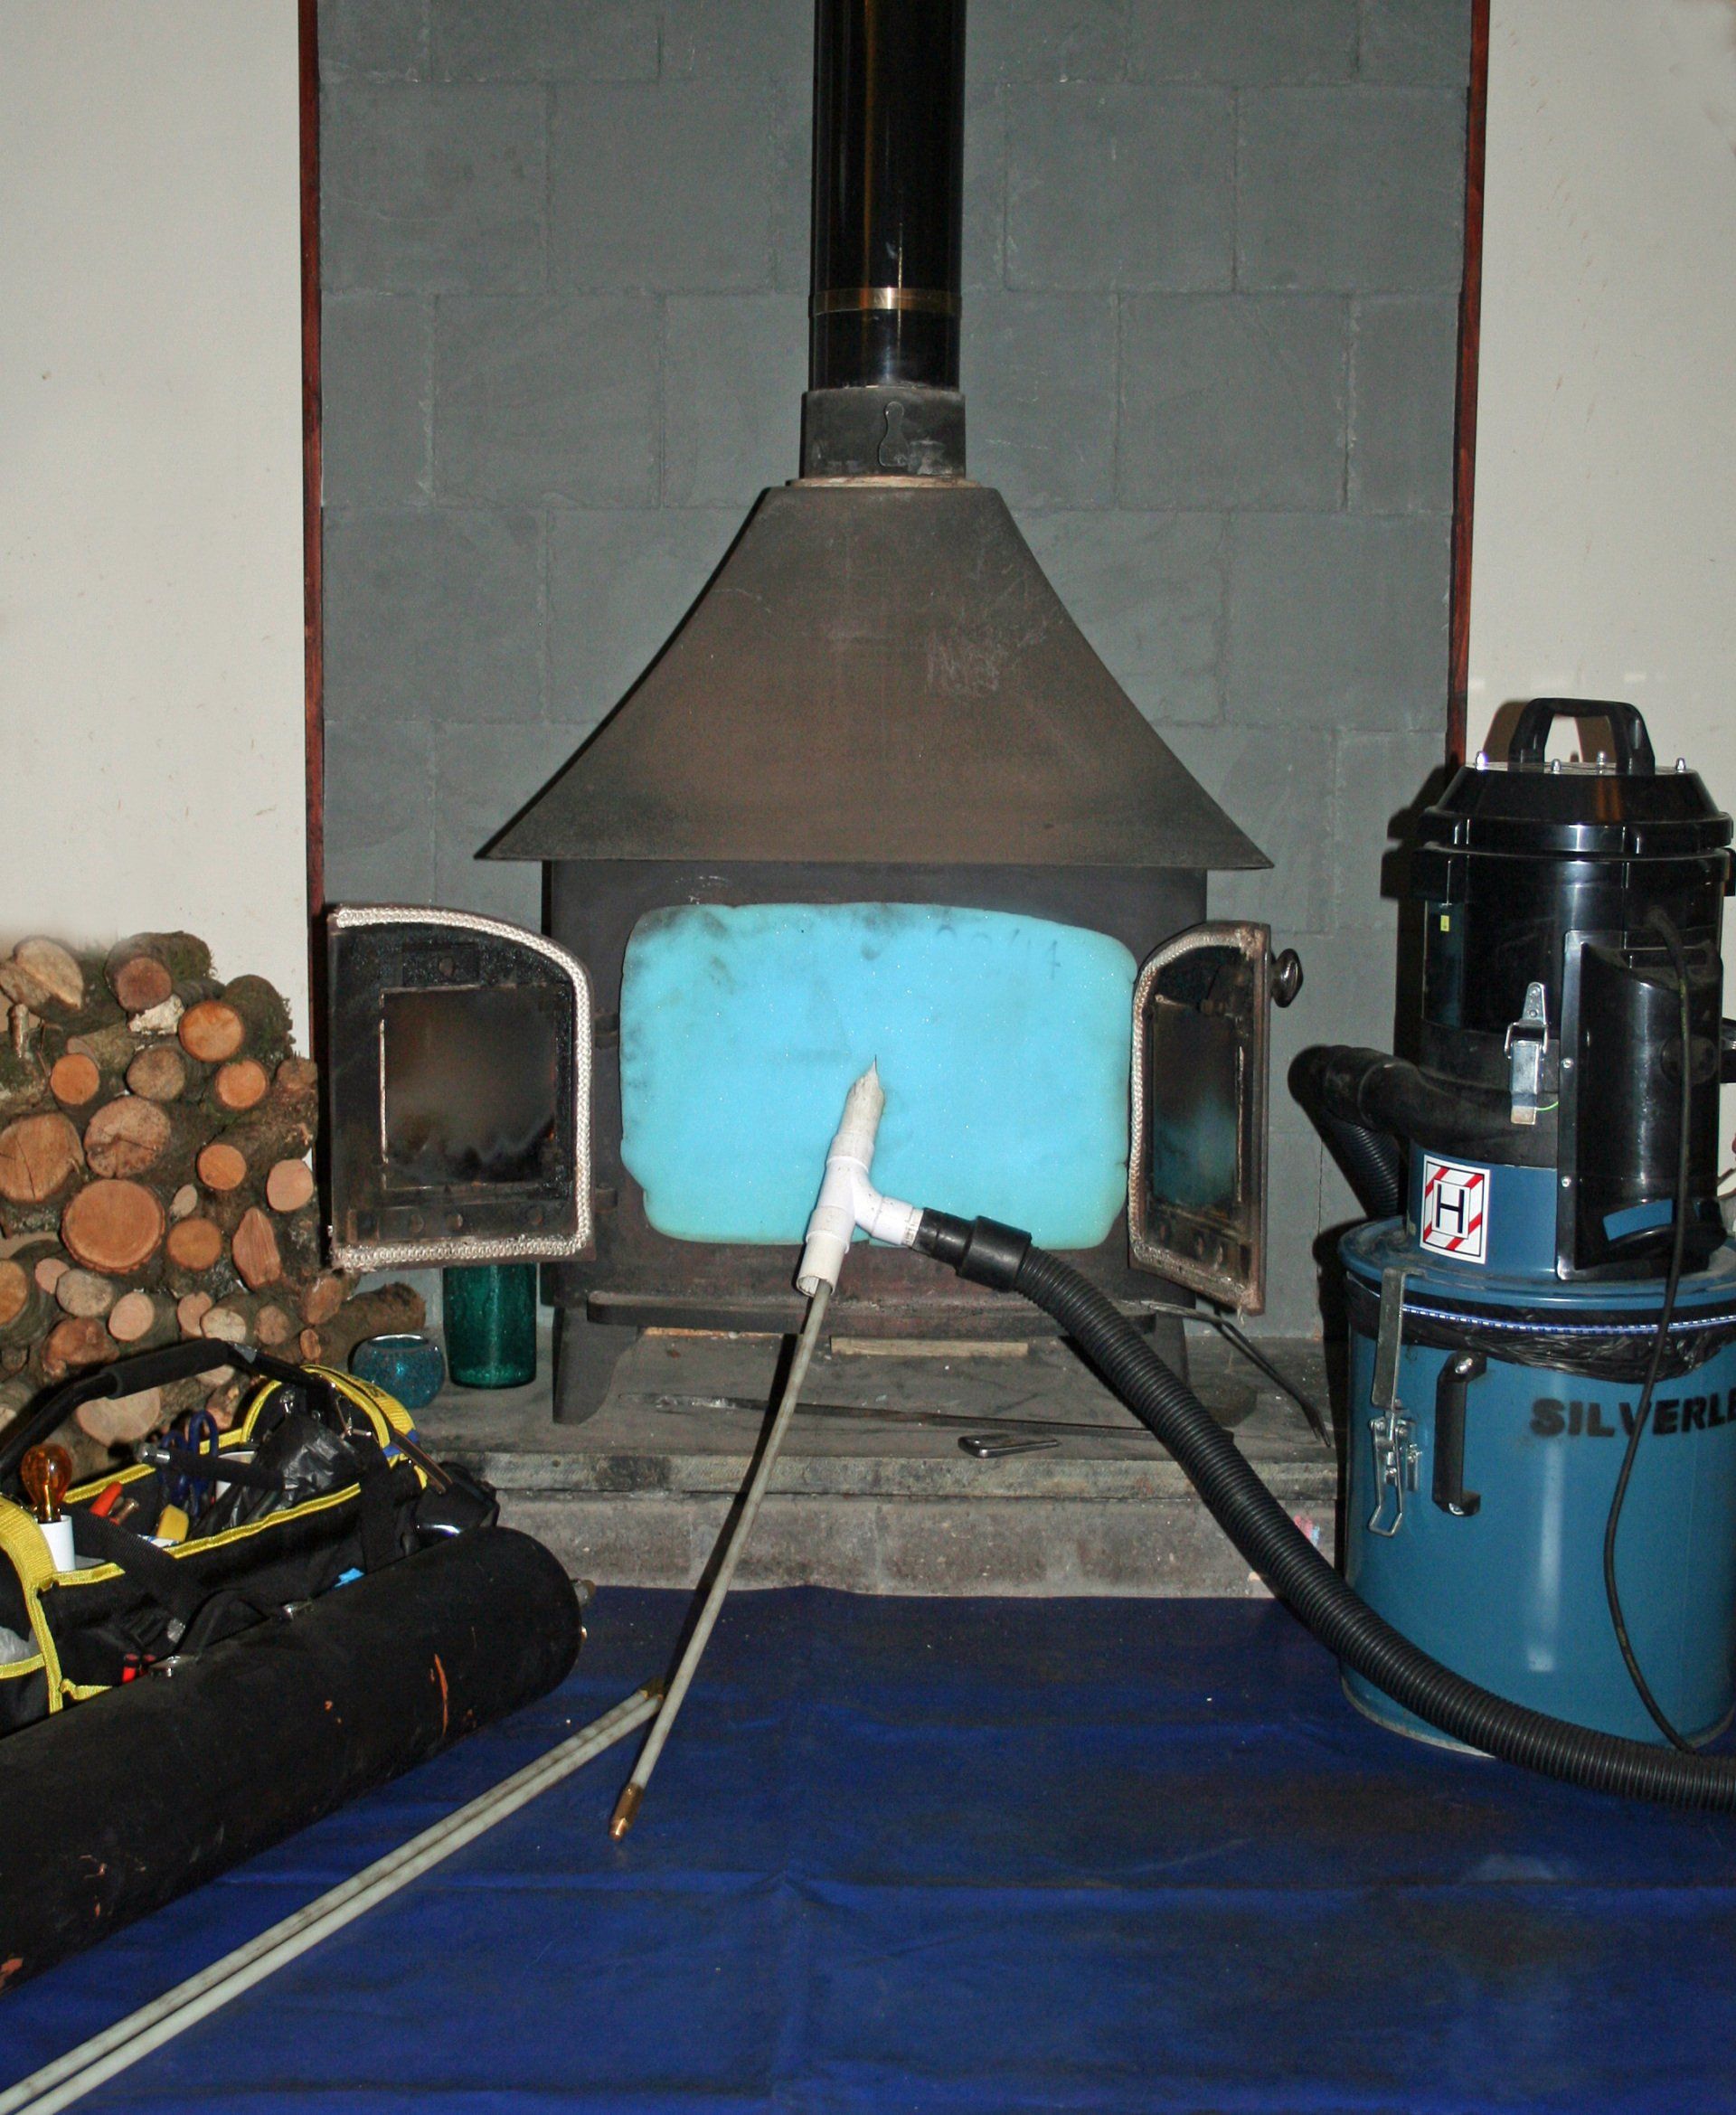 Silverleaf - sweeping a wood burning stove